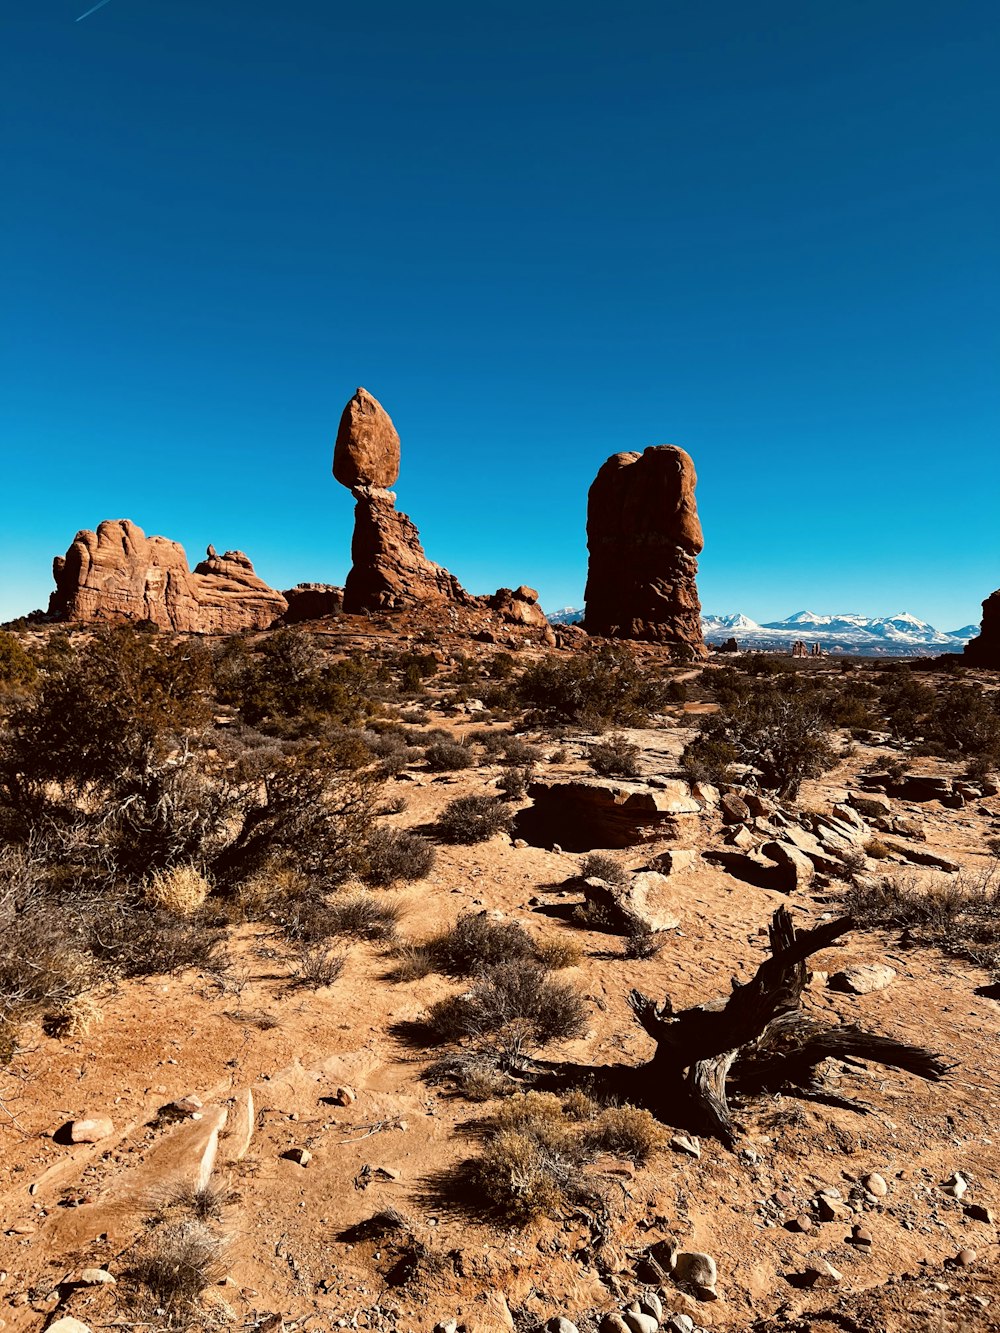 a desert landscape with tall rocks